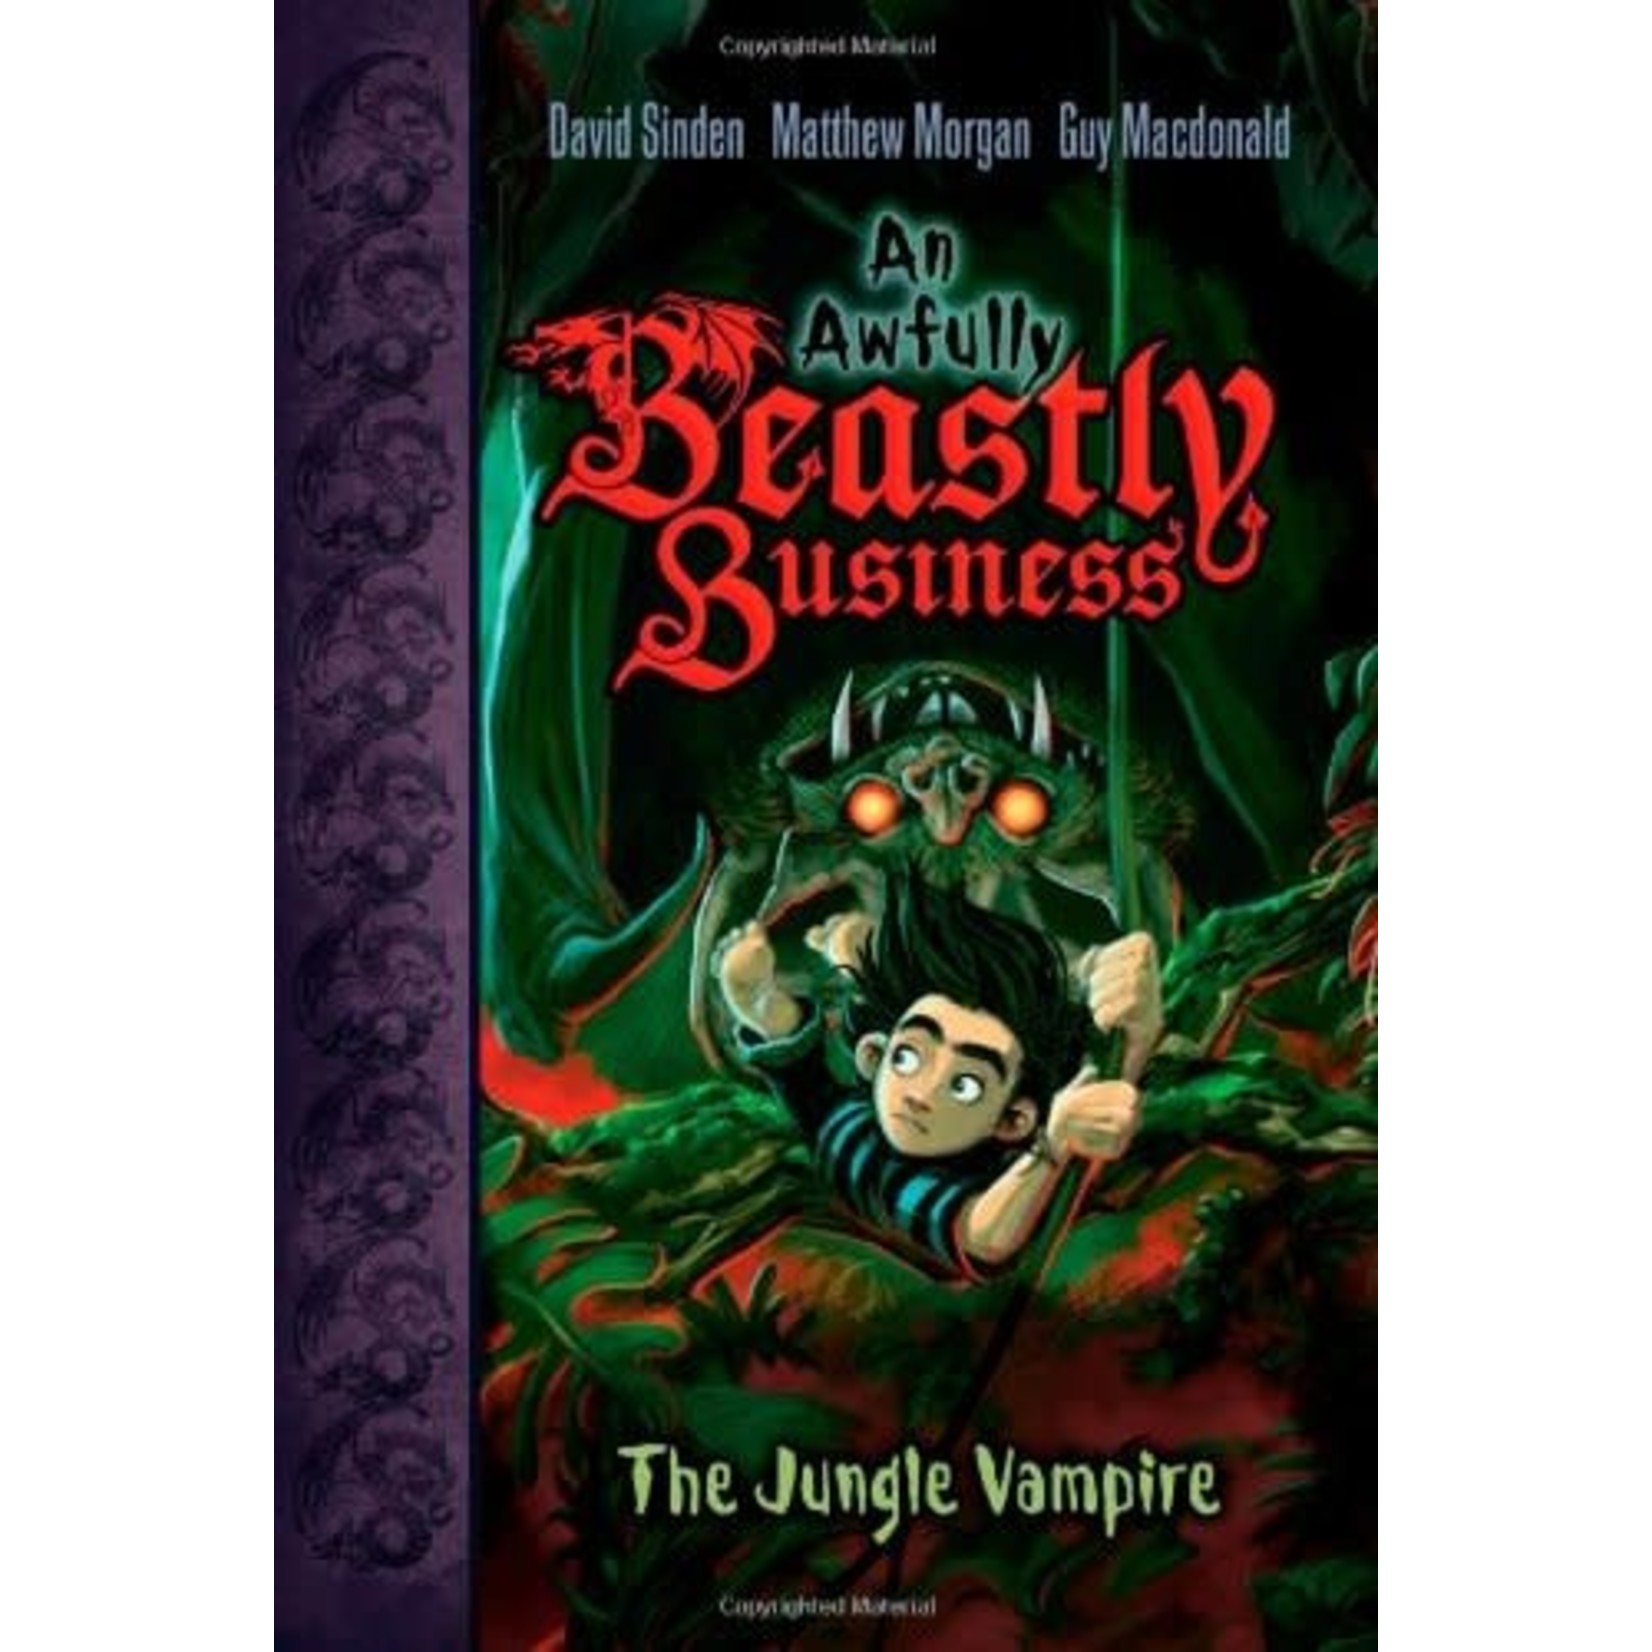 David Sniden  Matthew Morgan An Awfully Beastly Business Book 4  The Jungle Vampire